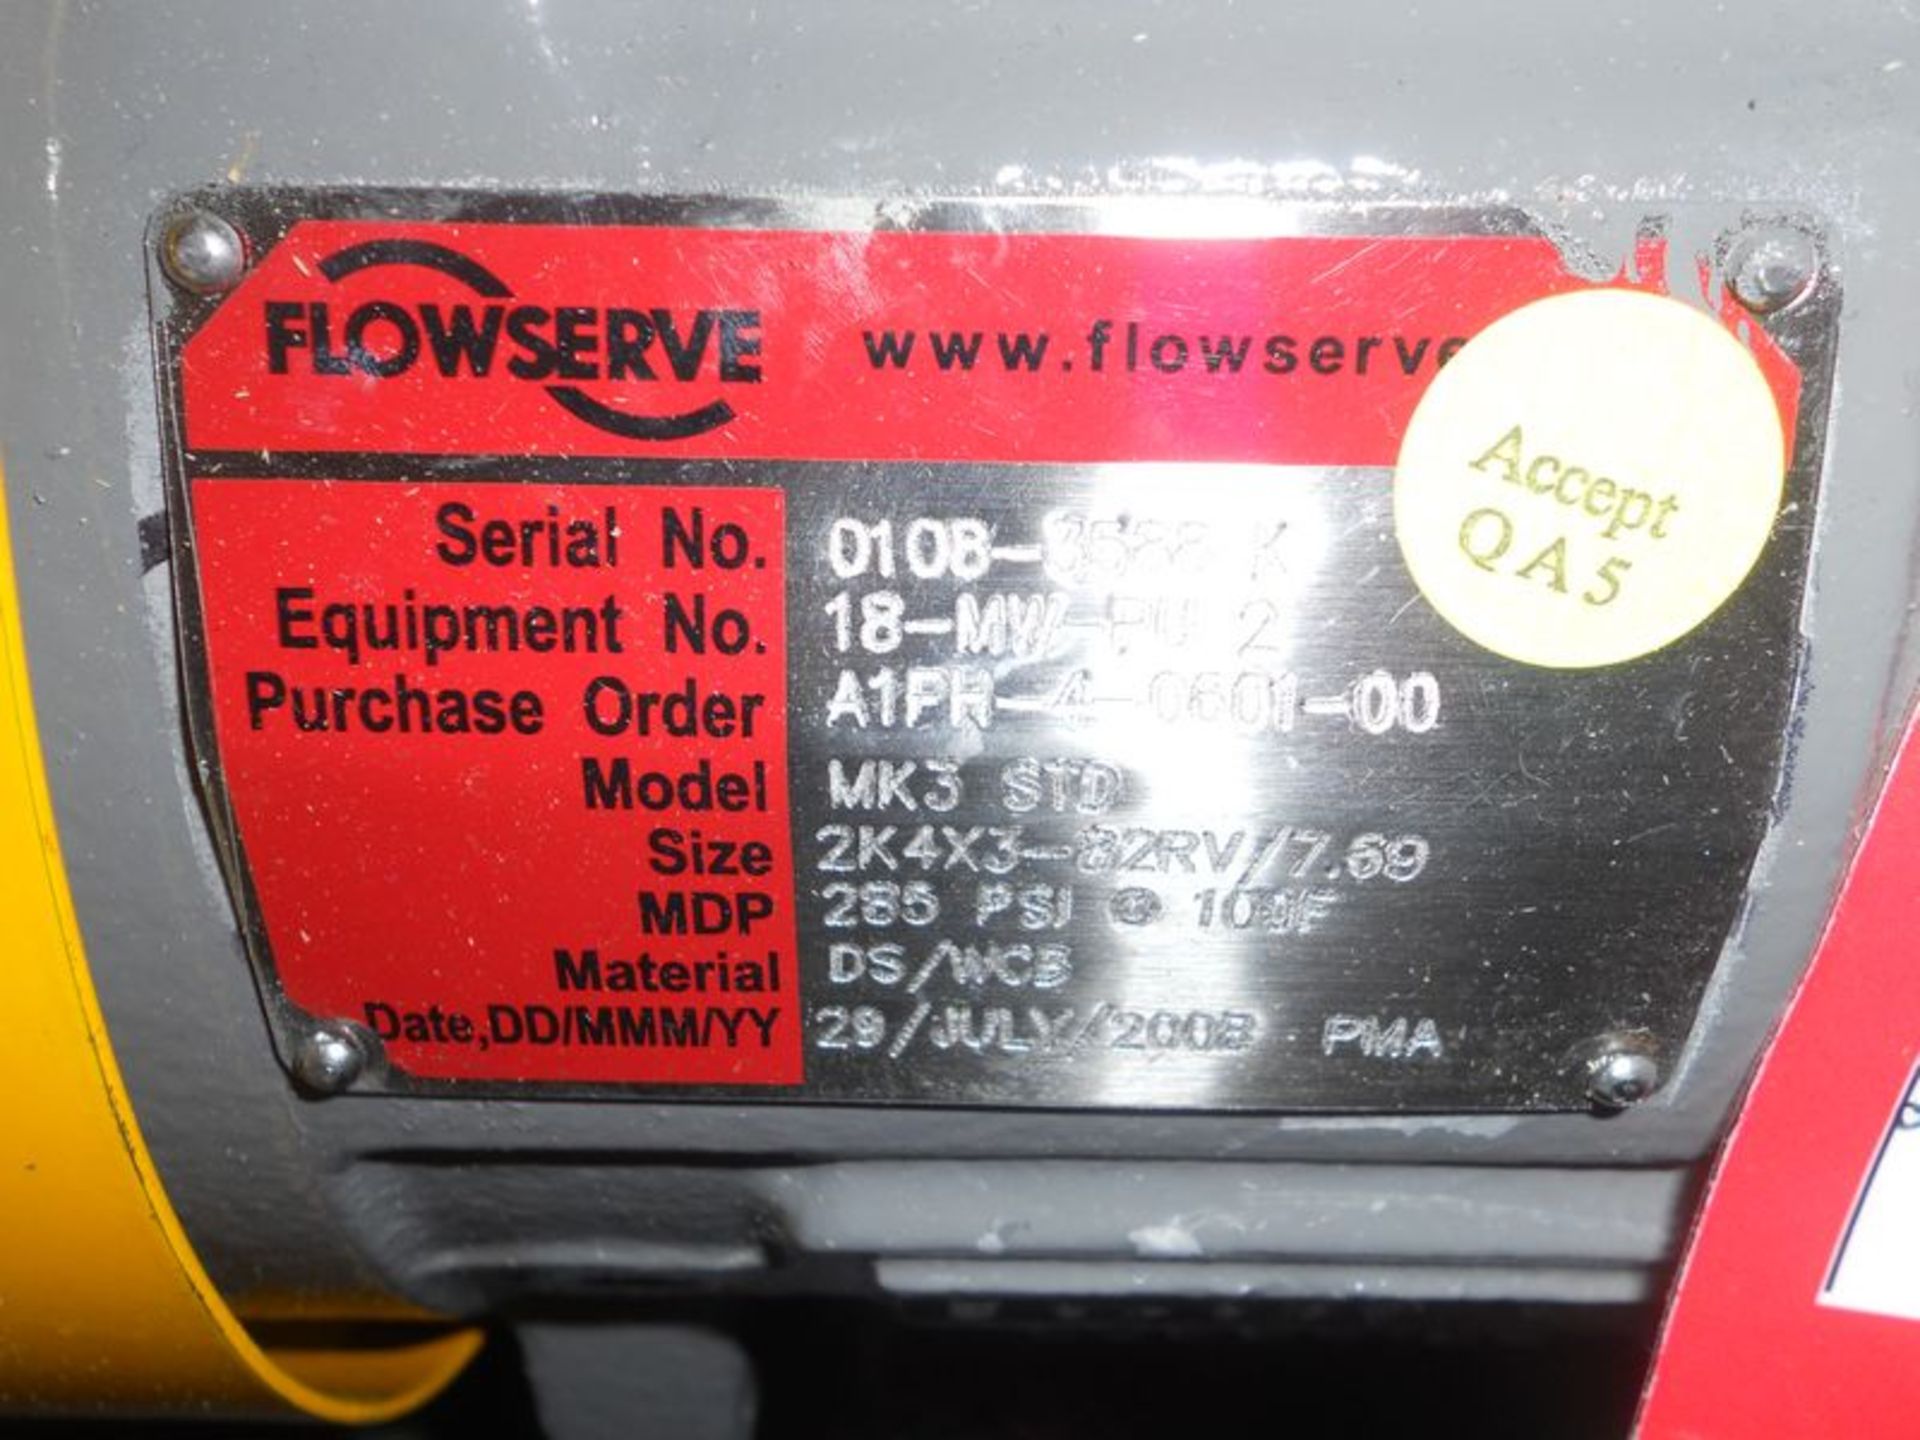 FlowServe MK3 STD centrifugal pump, S/N 0108-3591-J, 4" X 3", 60 HP, MDP 285 psi @ 100 DegF, Size - Image 5 of 6